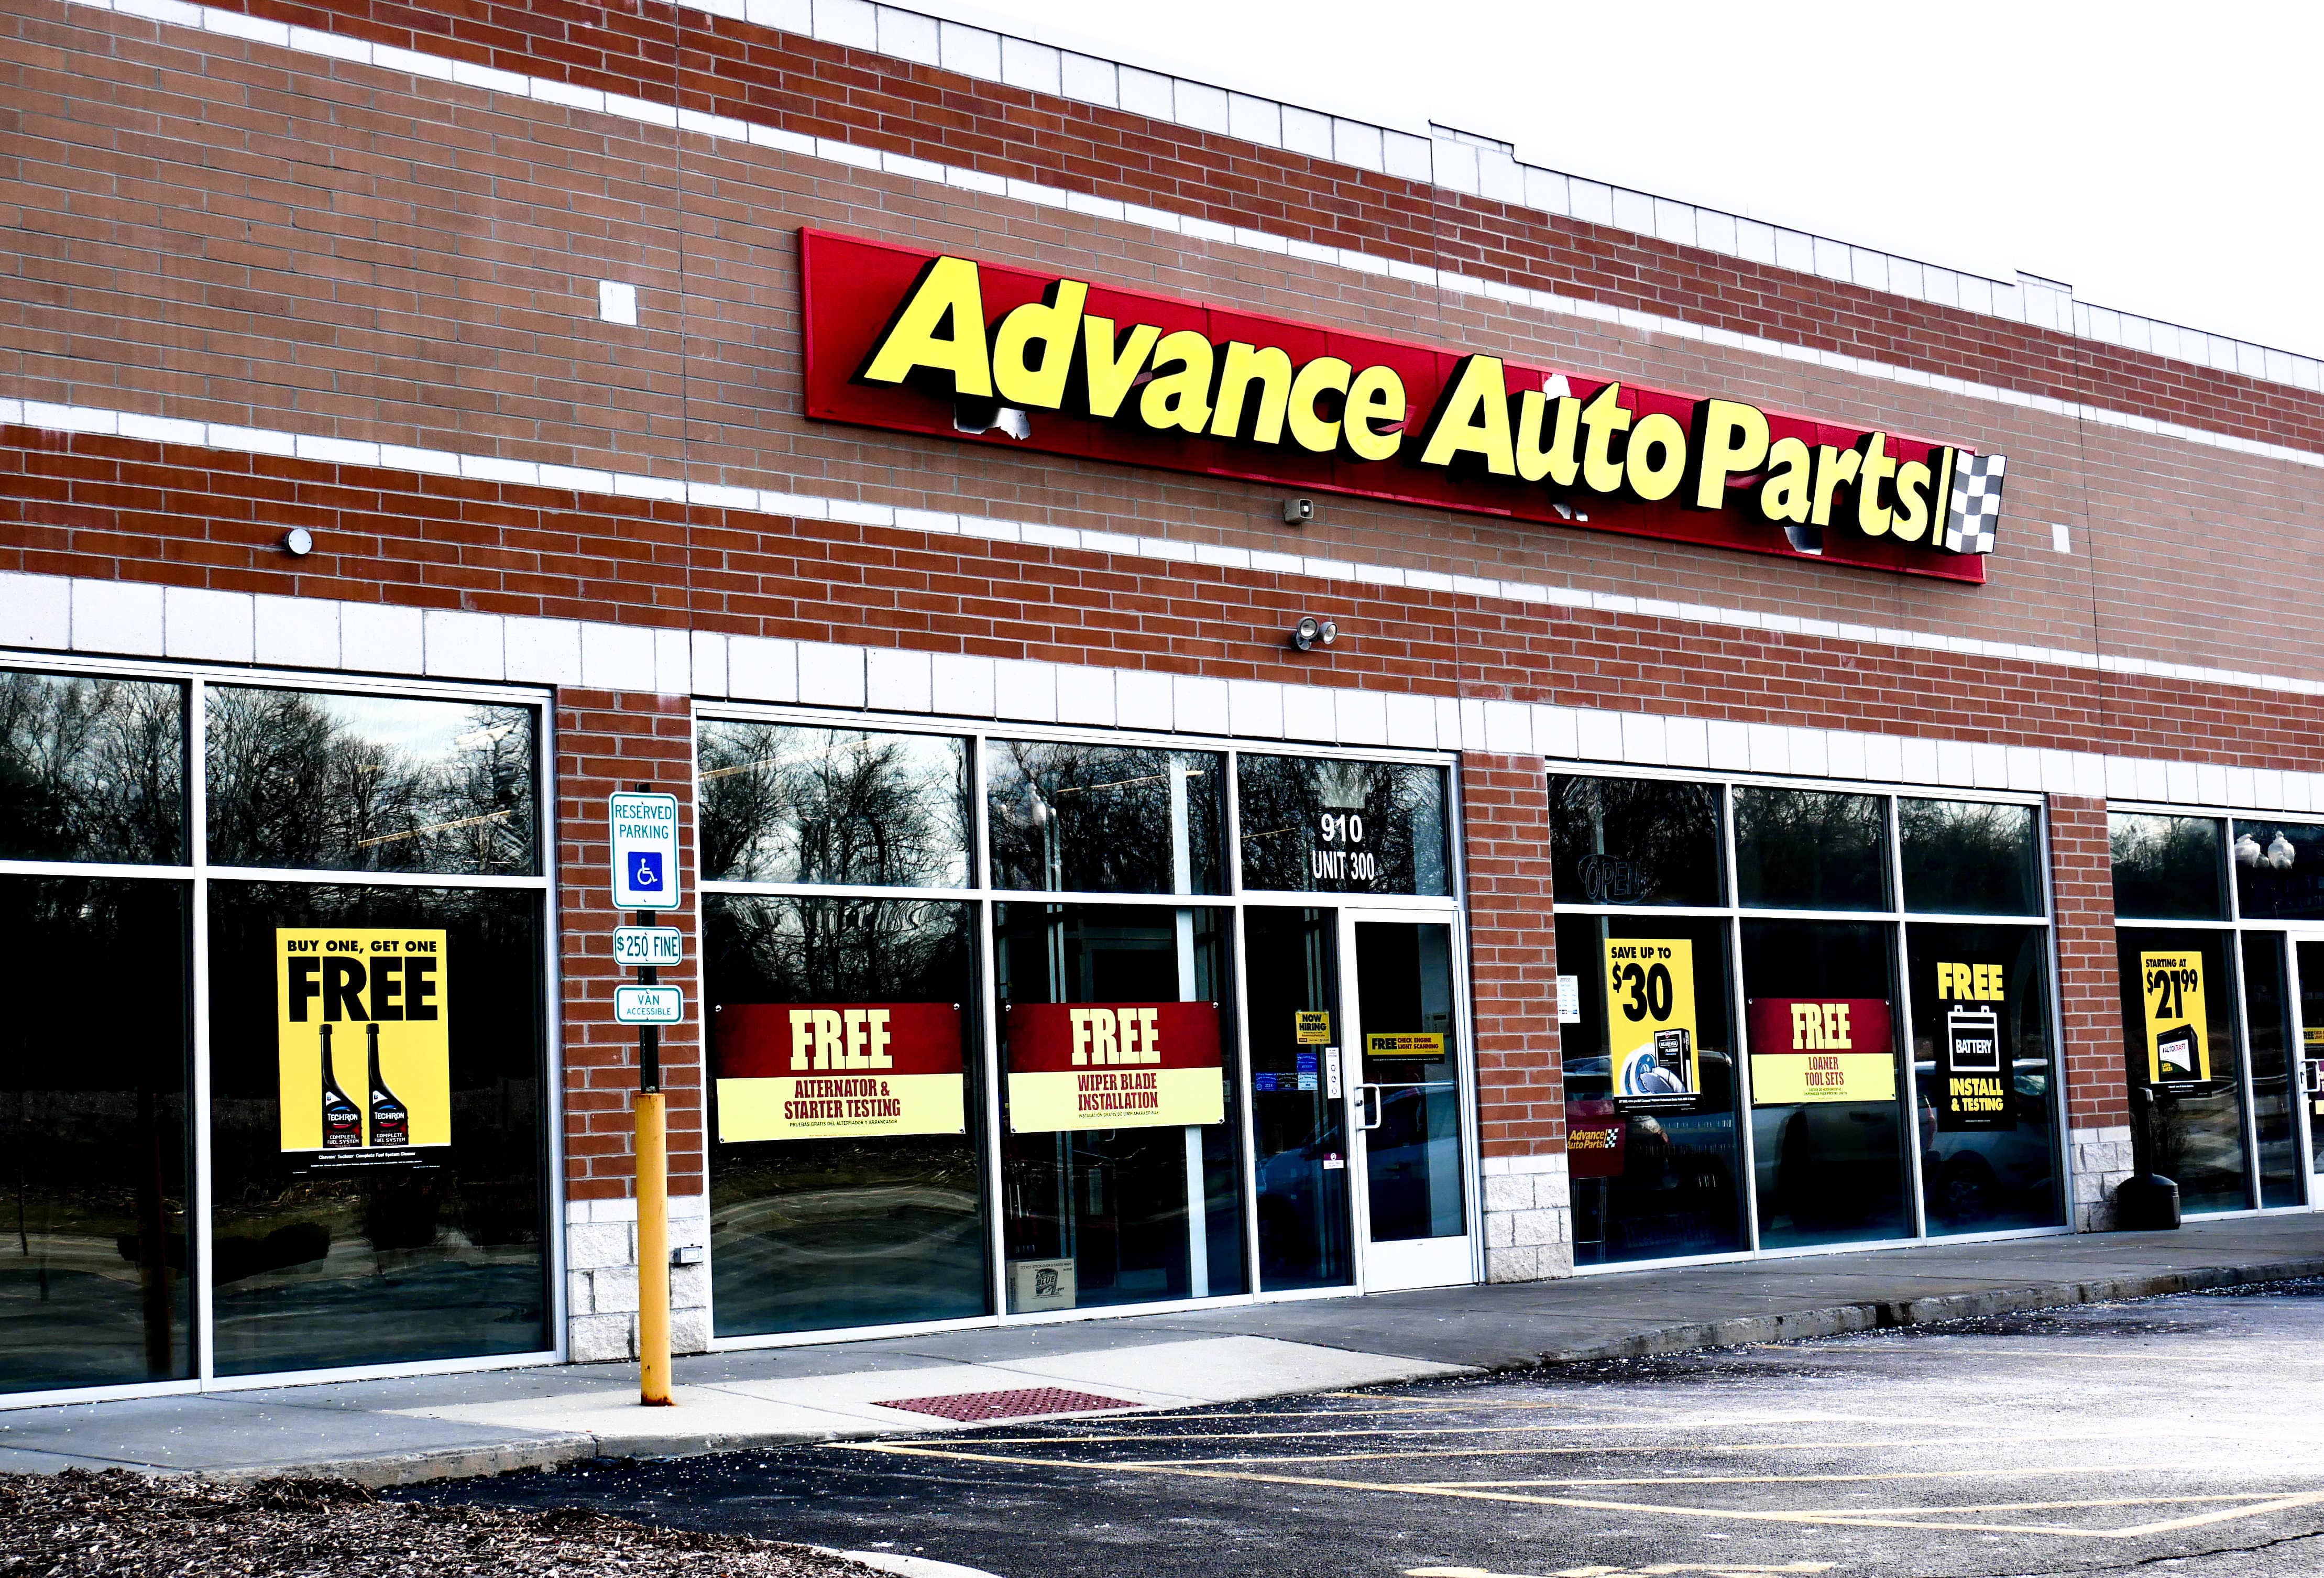 Advance Auto Parts - Fox River Grove (IL 60021), US, 24 hour auto parts